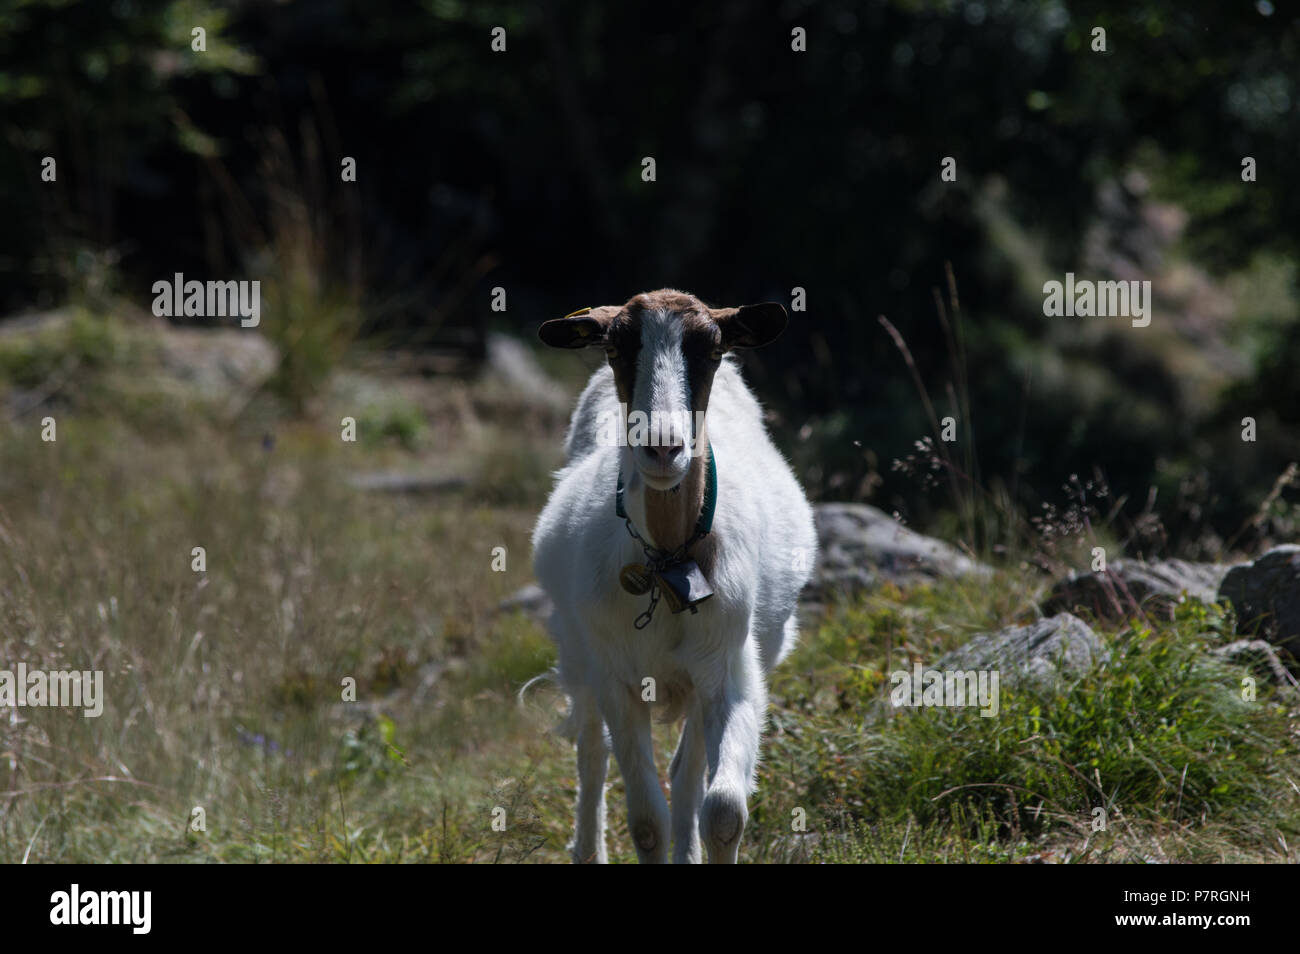 Goat photographed on Piedmont's mountains, Italy. Capra fotografata sulle montagne del Lago Maggiore, Piemonte, Italia Stock Photo